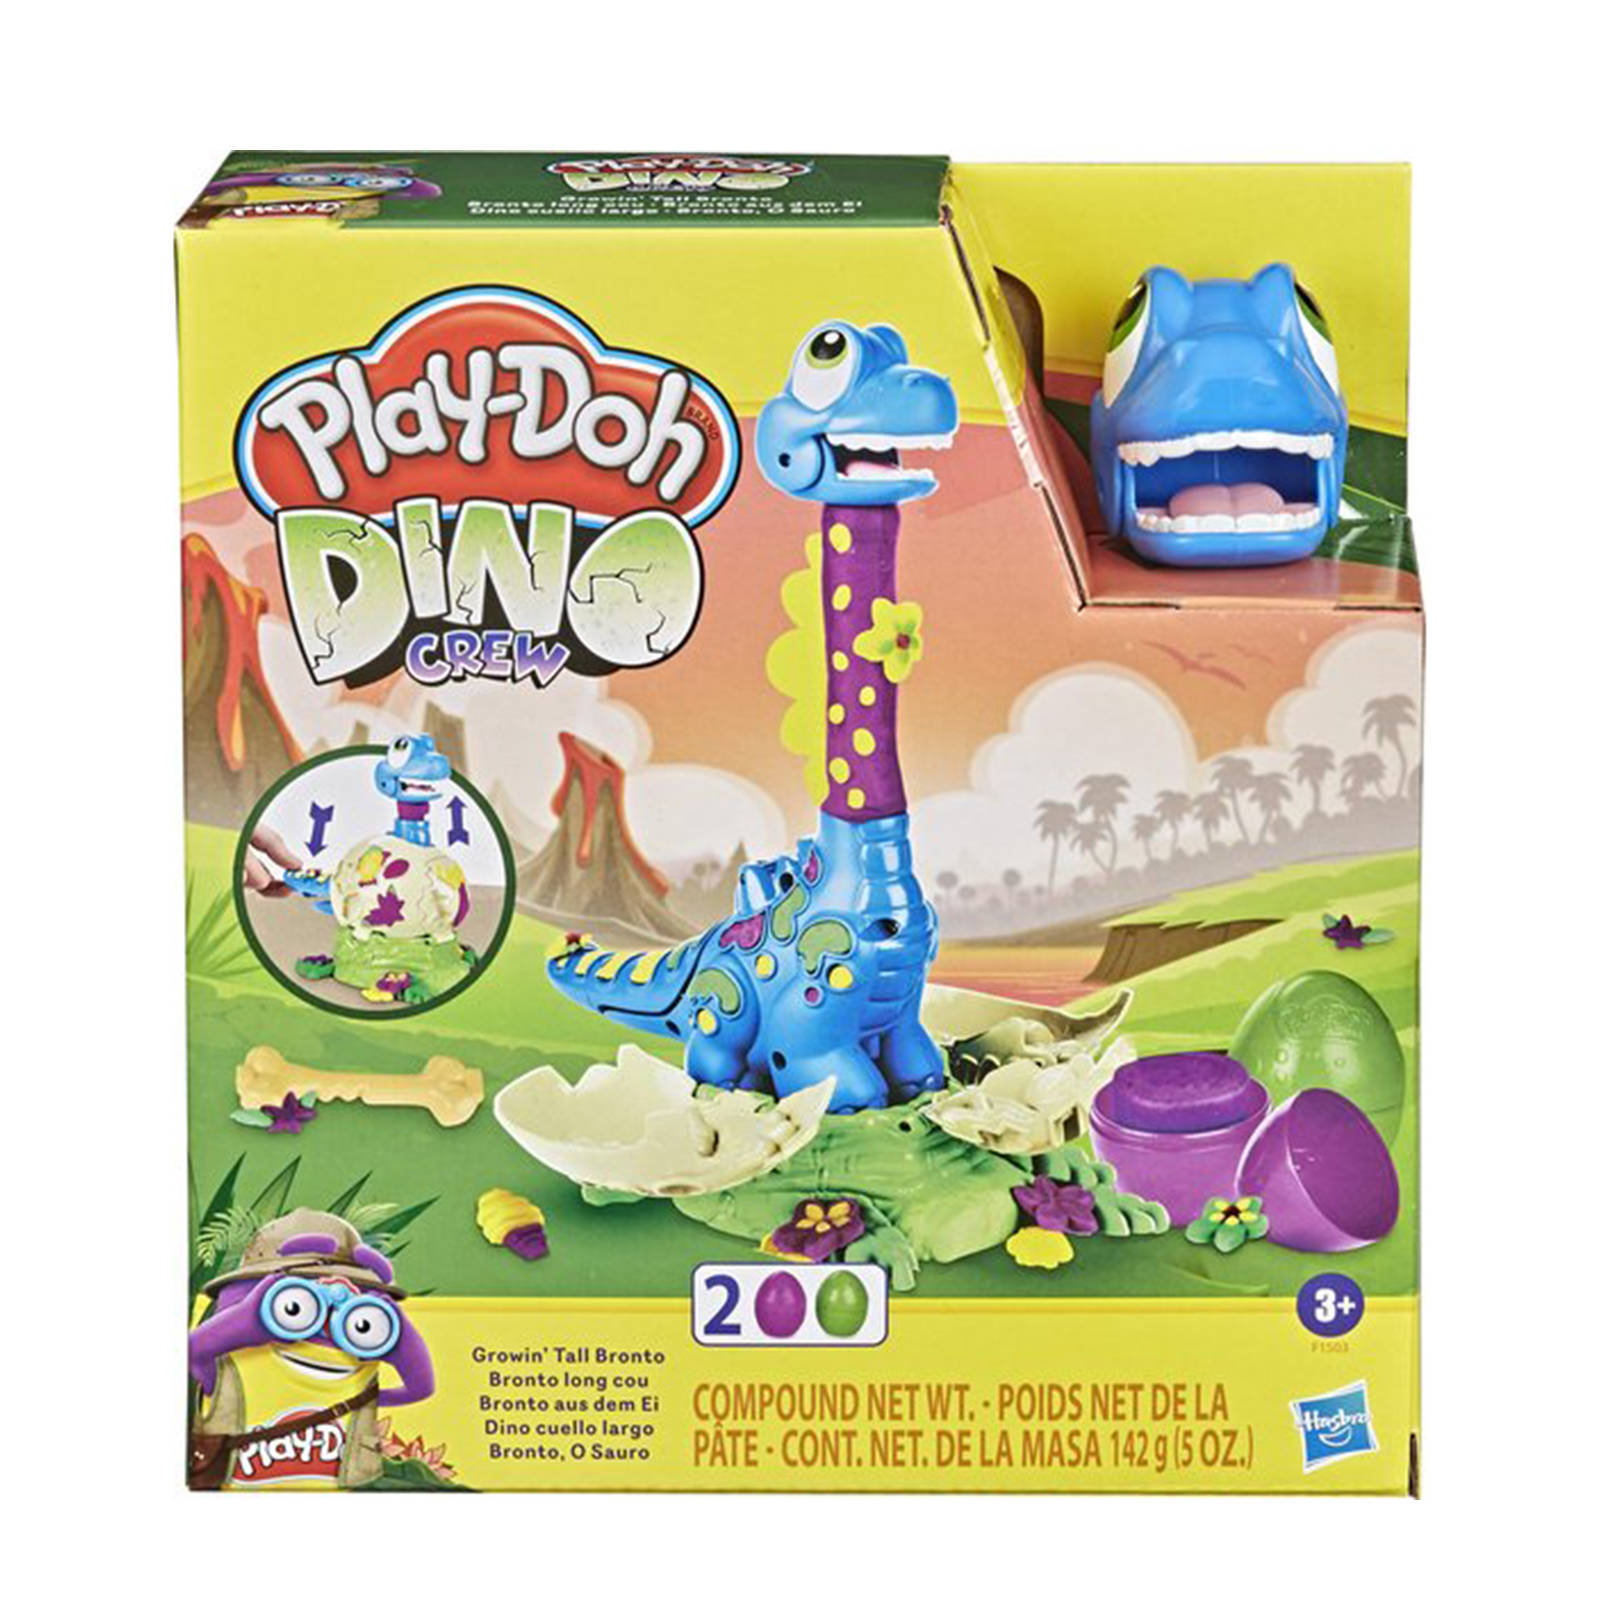 Play-Doh Play doh Kleiset Dino Crew Growing Tall Bronto Junior 7 delig online kopen